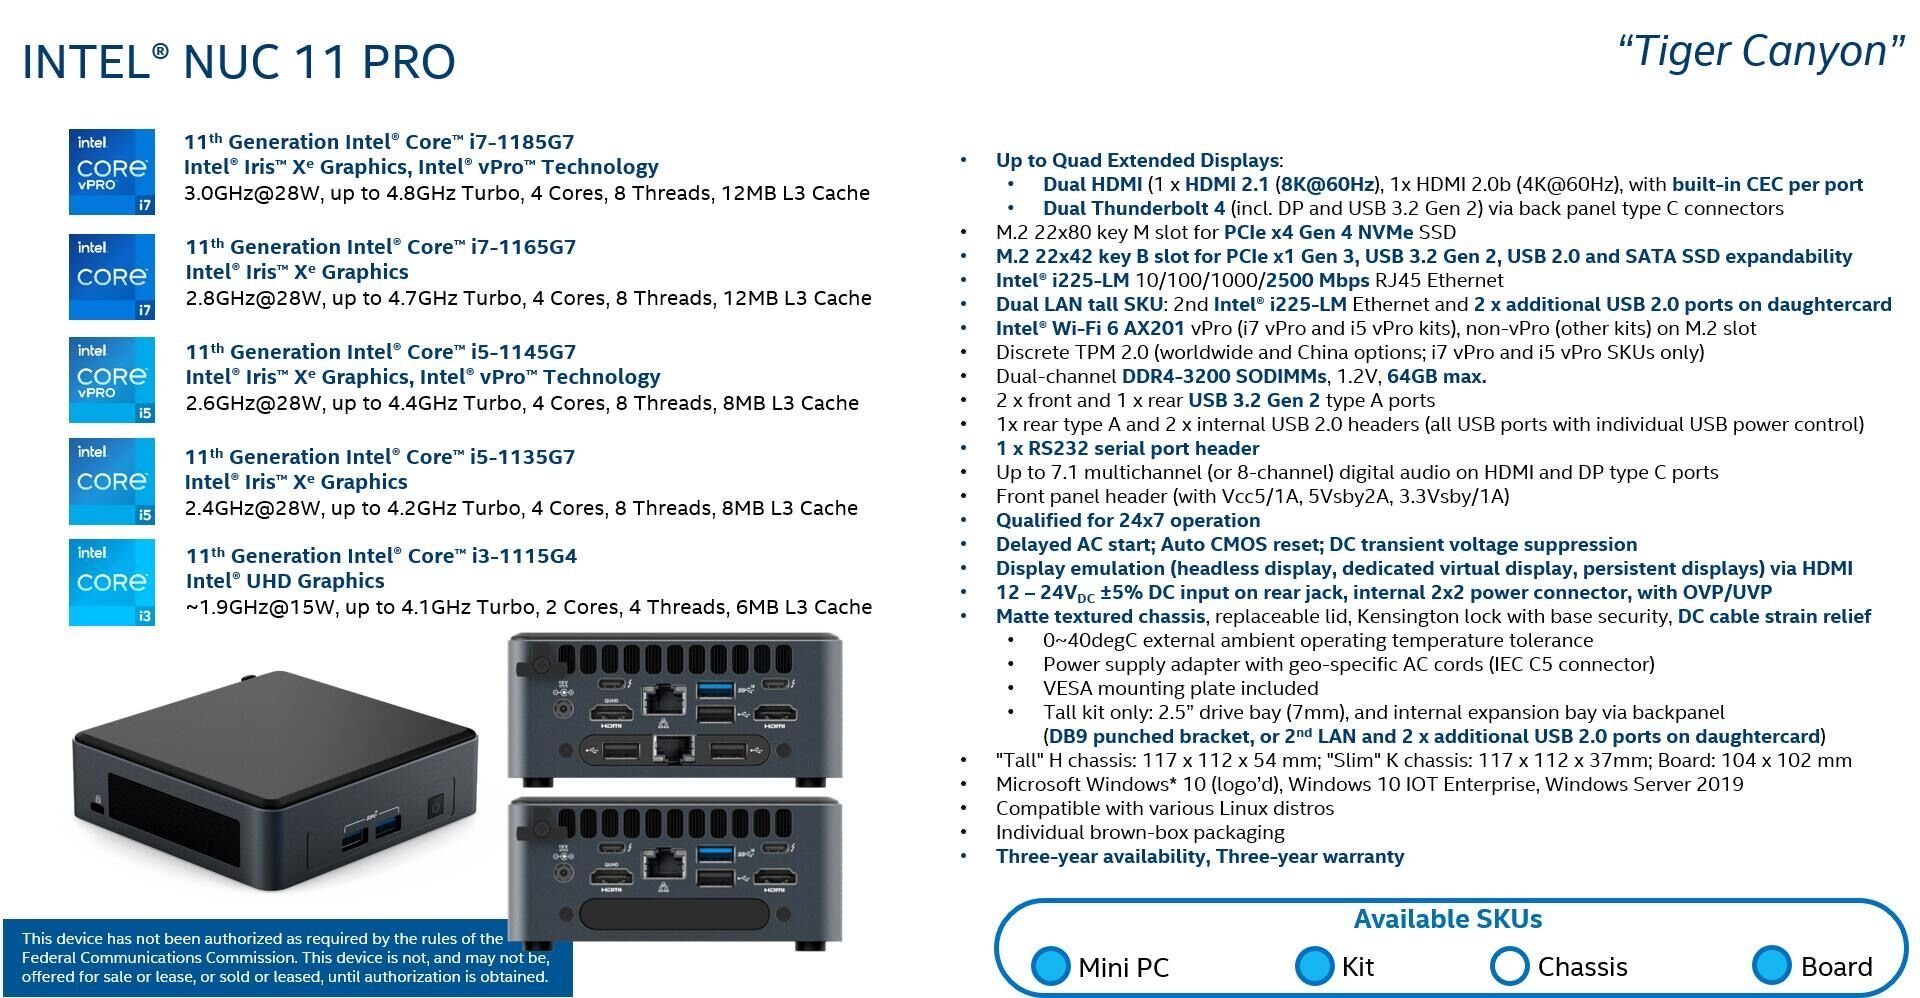  Intel NUC 11 with Core i7-1165G7 Processor(Quad-Core